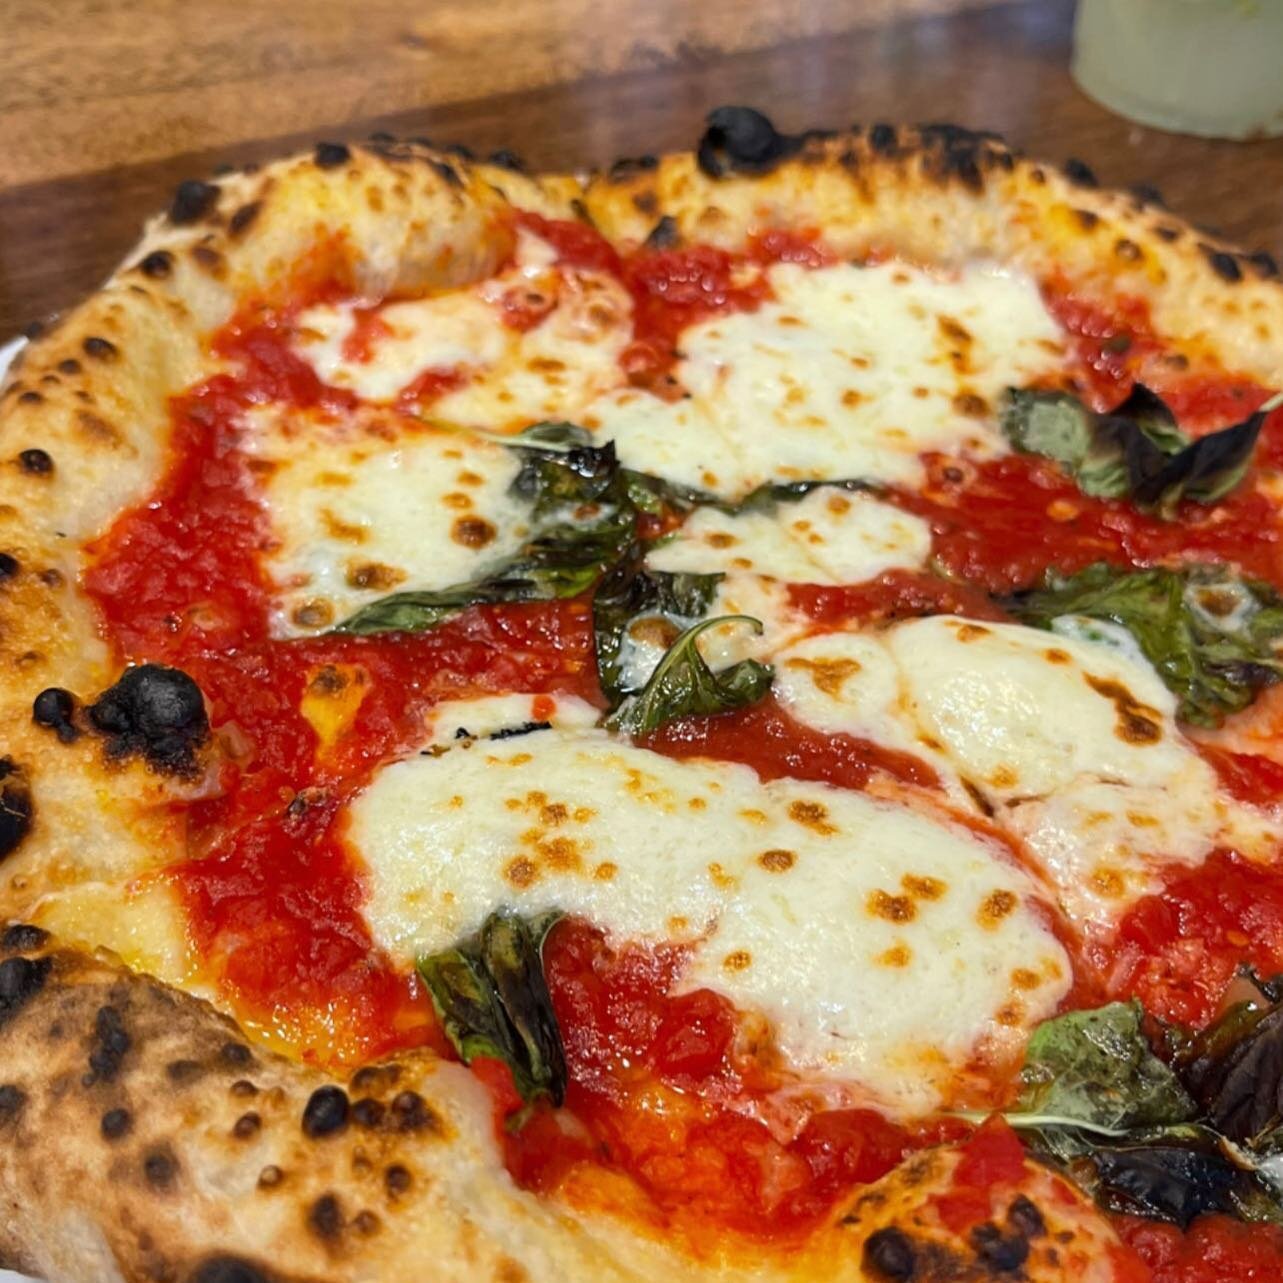 For the love of pizza! 

.
.
.
#pizza #pizzanapoletana #woodfired #crust #summer #westhampton #westhamptonbeach #pizzatime #pizzalover #longisland #newyork